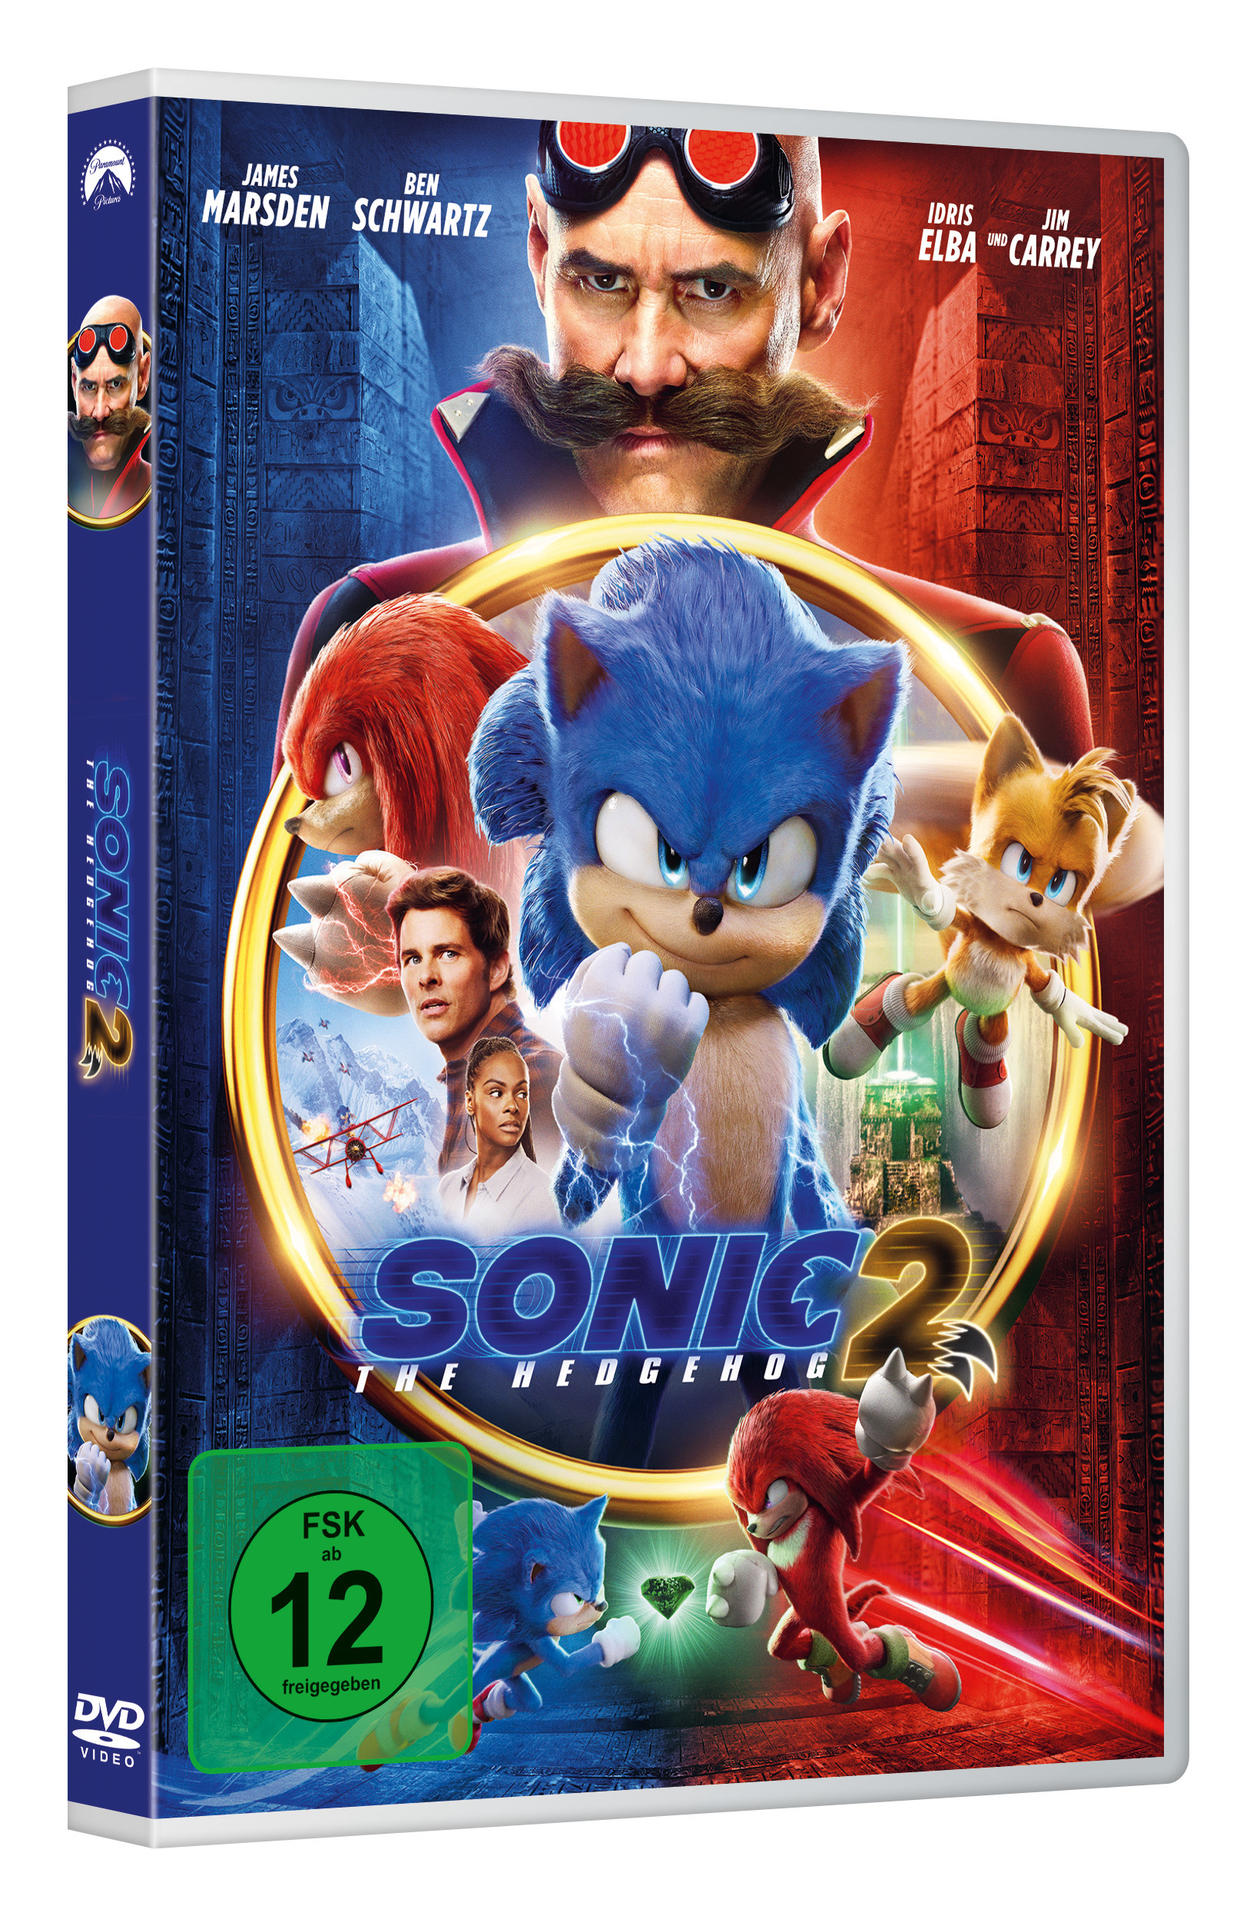 Sonic the Hedgehog 2 DVD